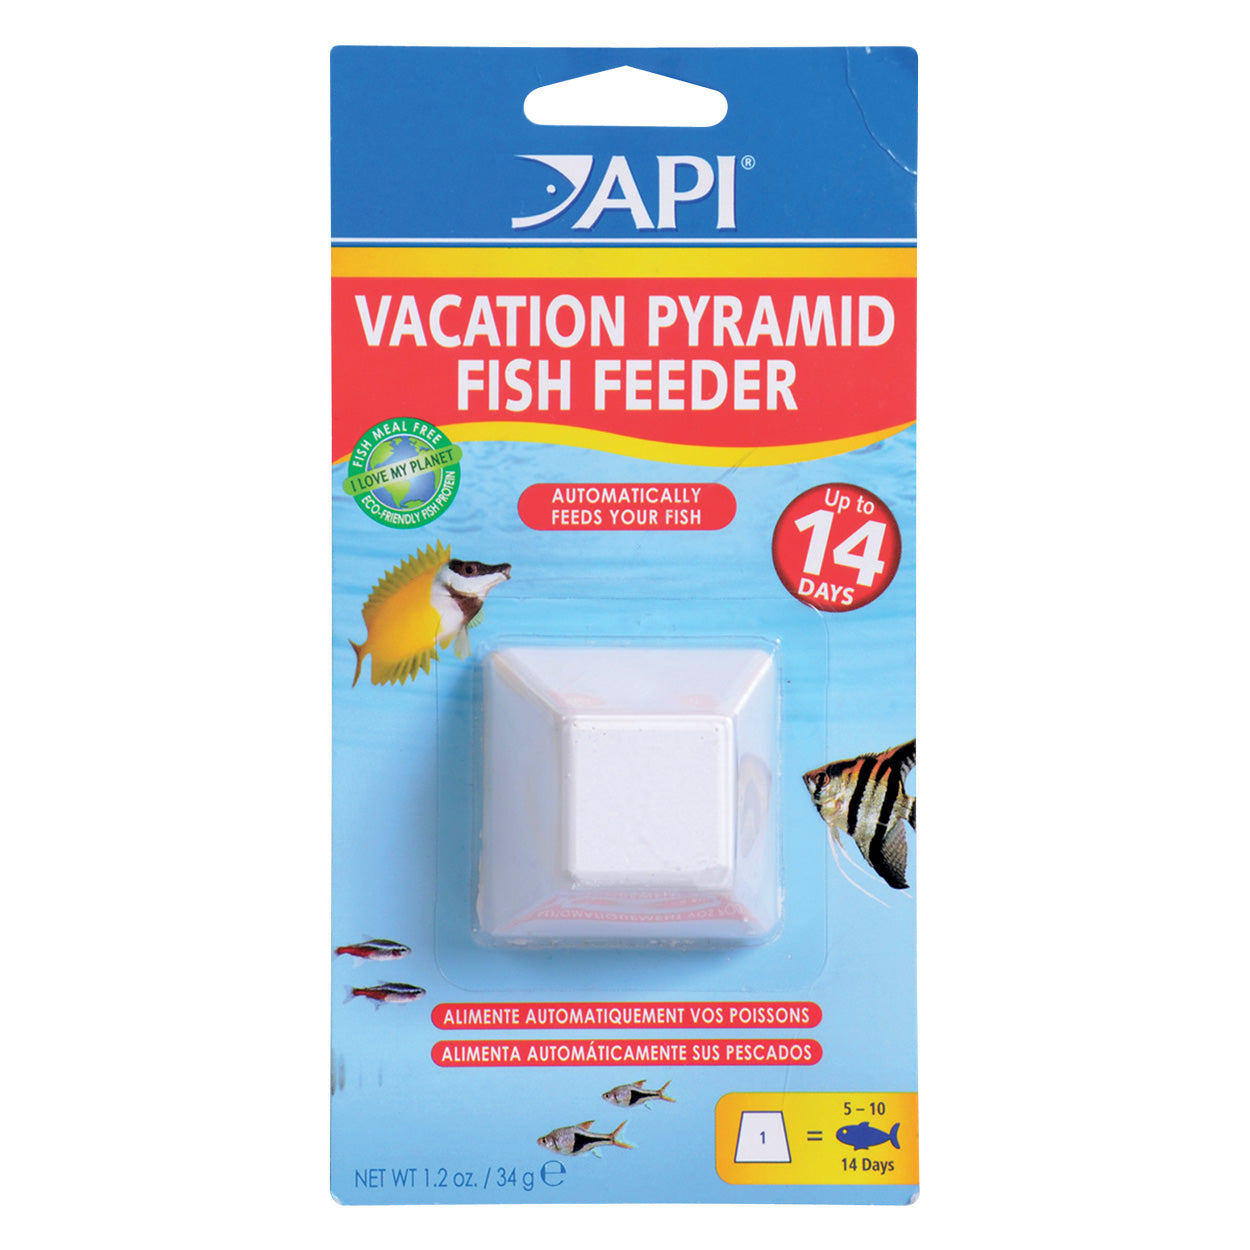 VACATION PYRAMID FISH FEEDER